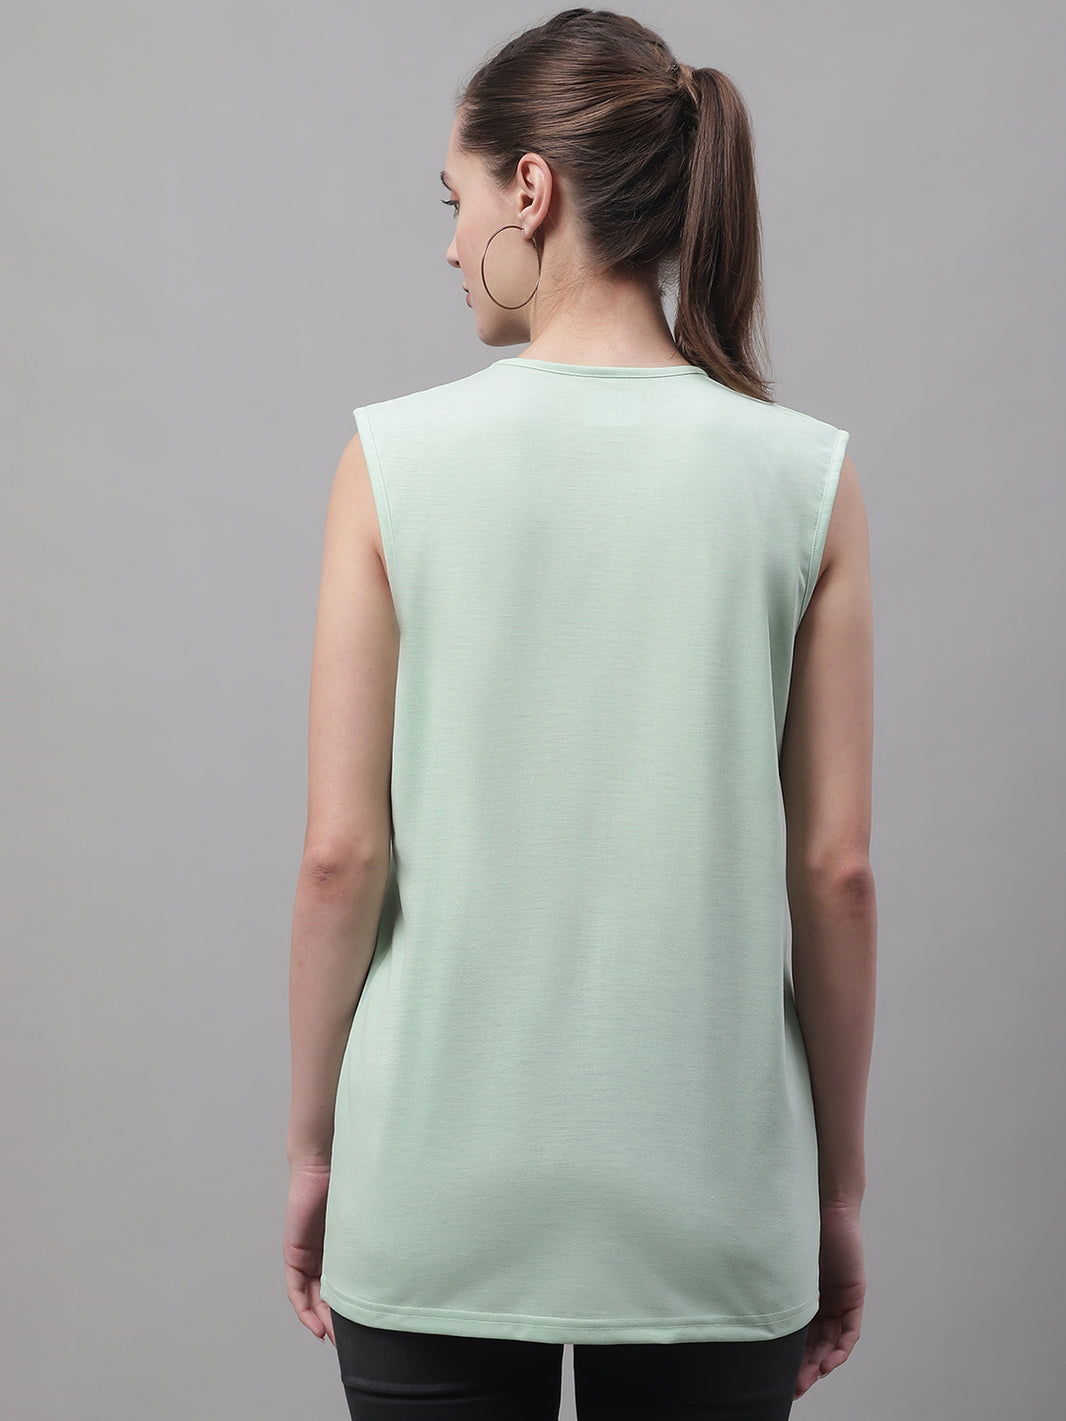 Vimal Jonney Regular Fit Cotton Solid Light Green Gym Vest for Women